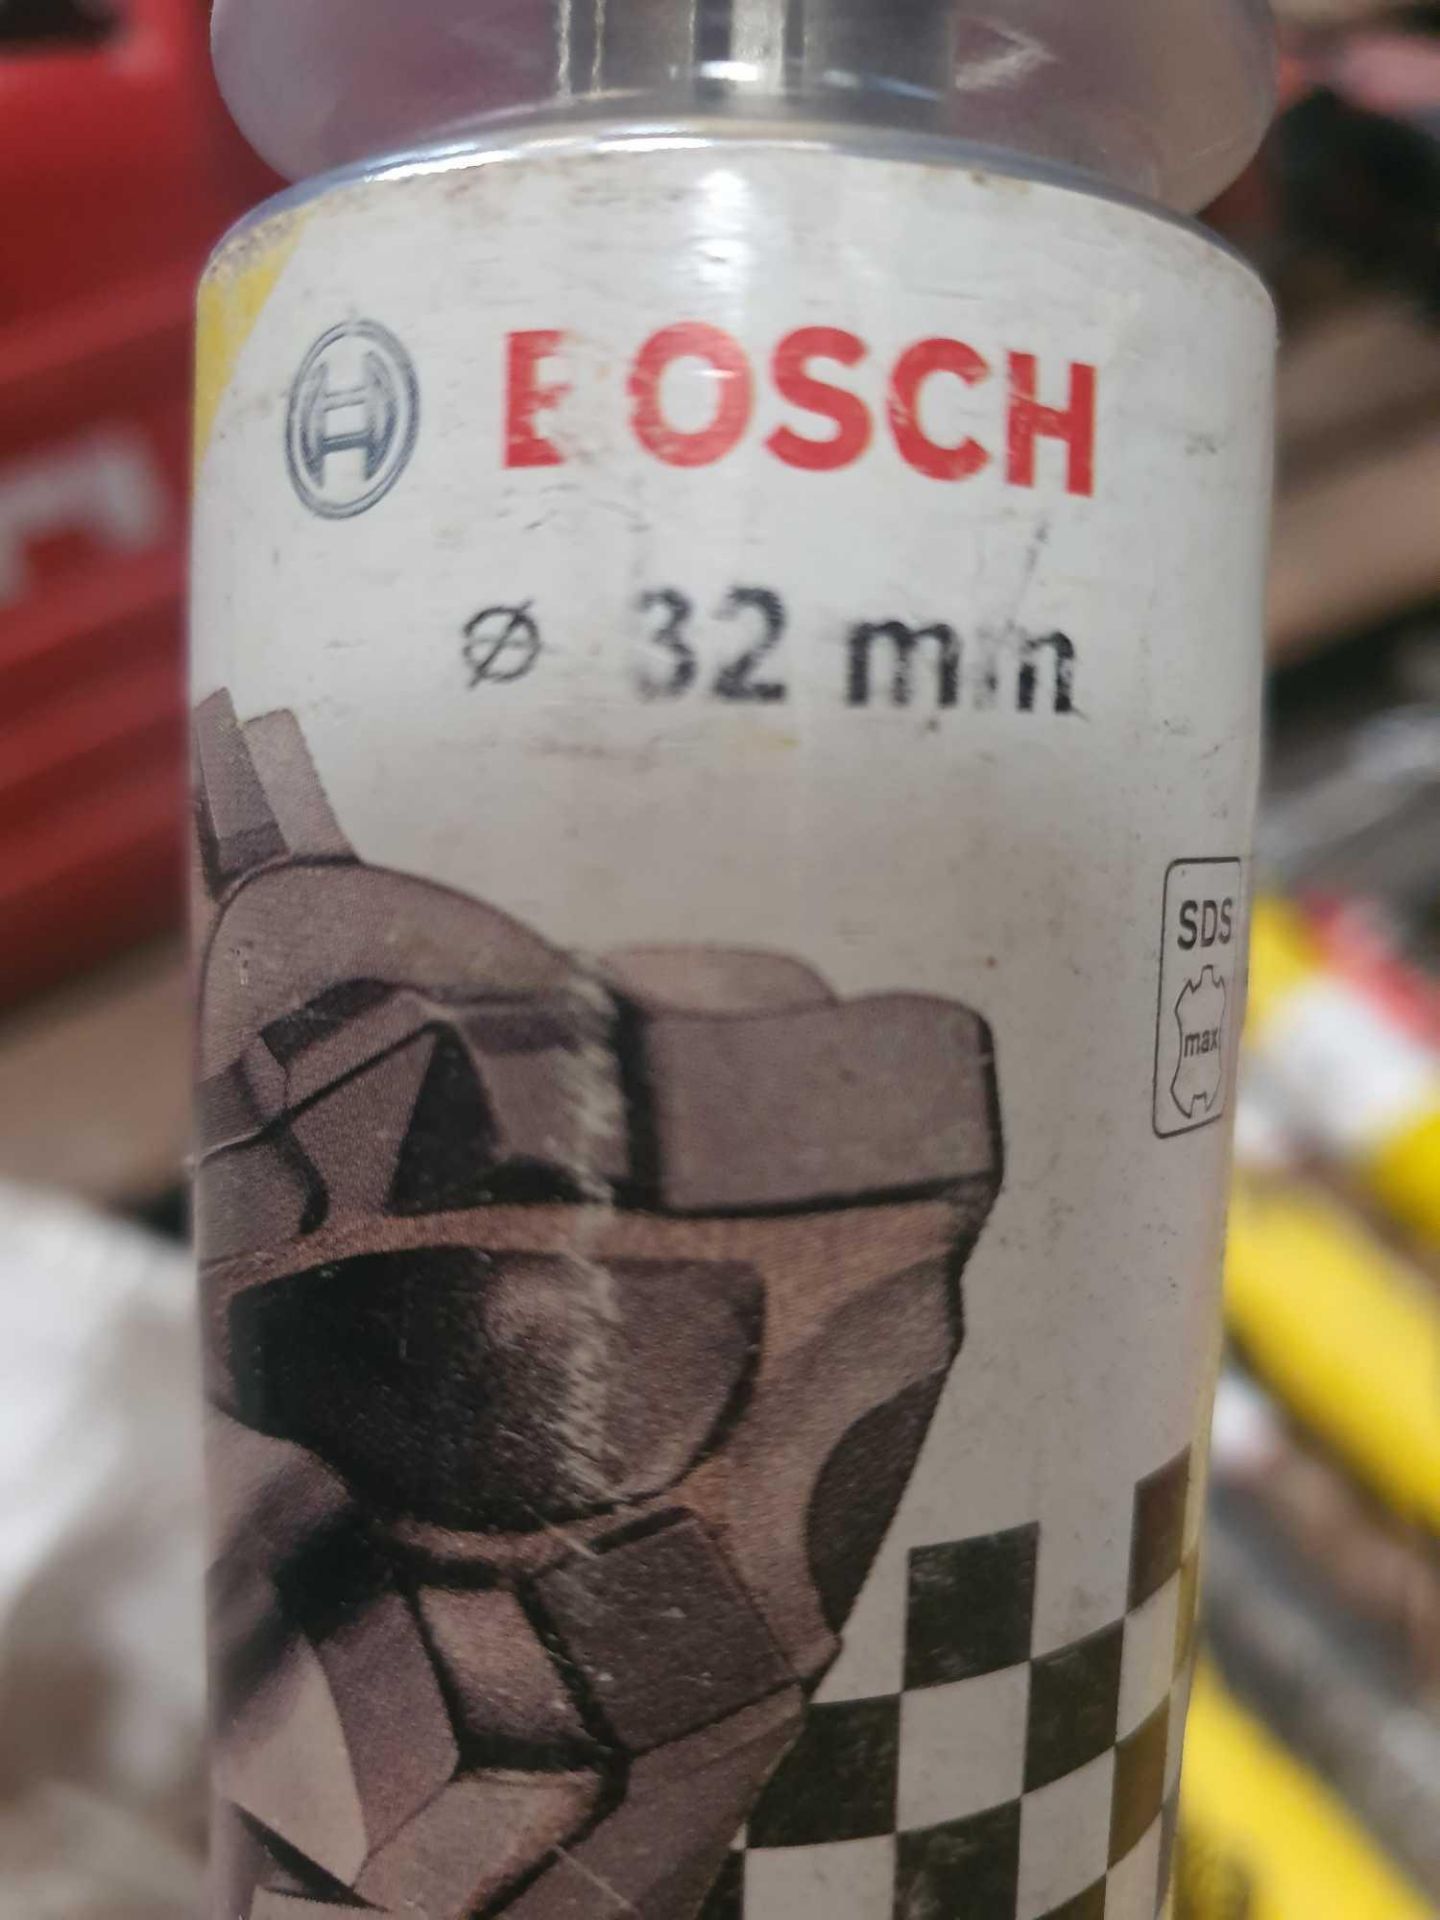 Bosch 32mm sds max drill bit - Image 3 of 3